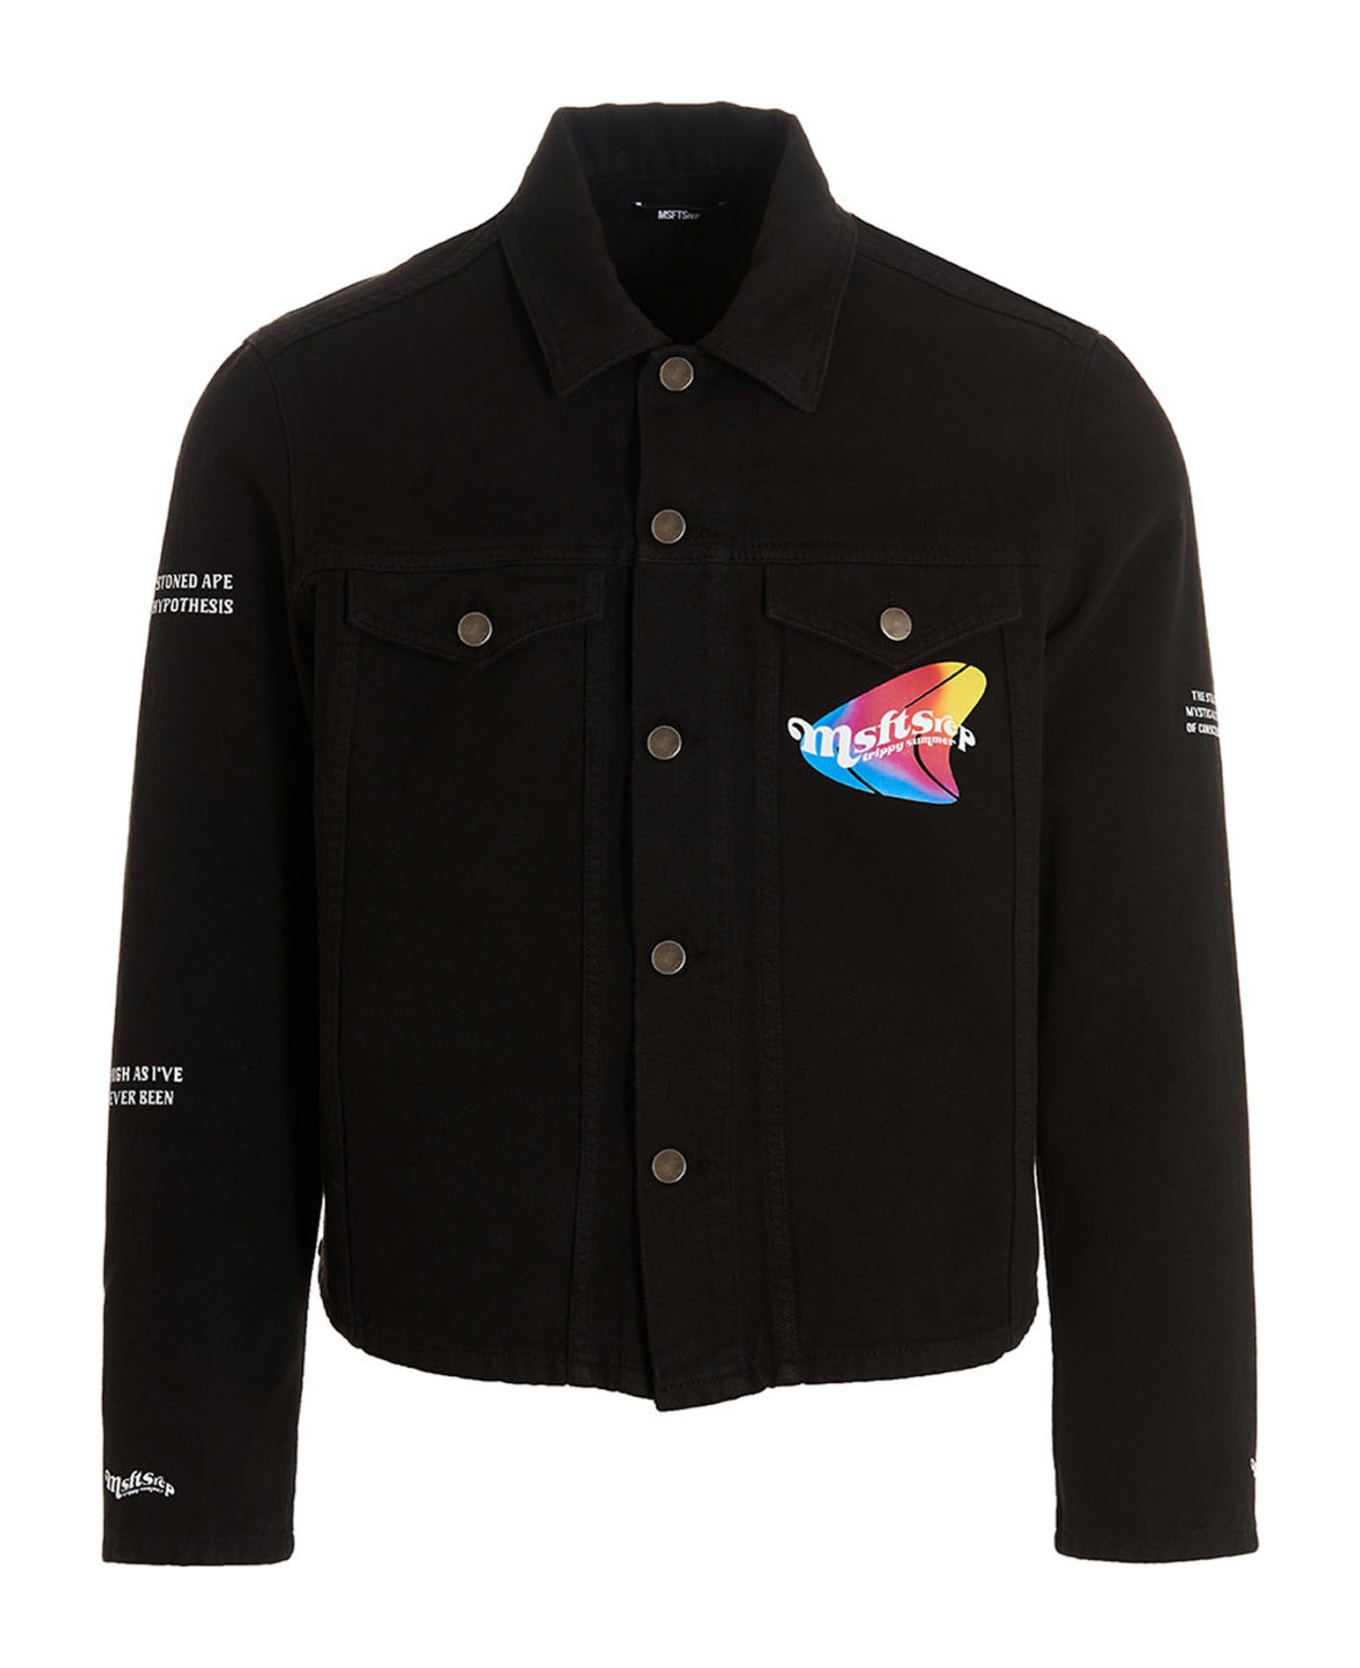 MSFTSrep Logo Denim Jacket - Black   ジャケット